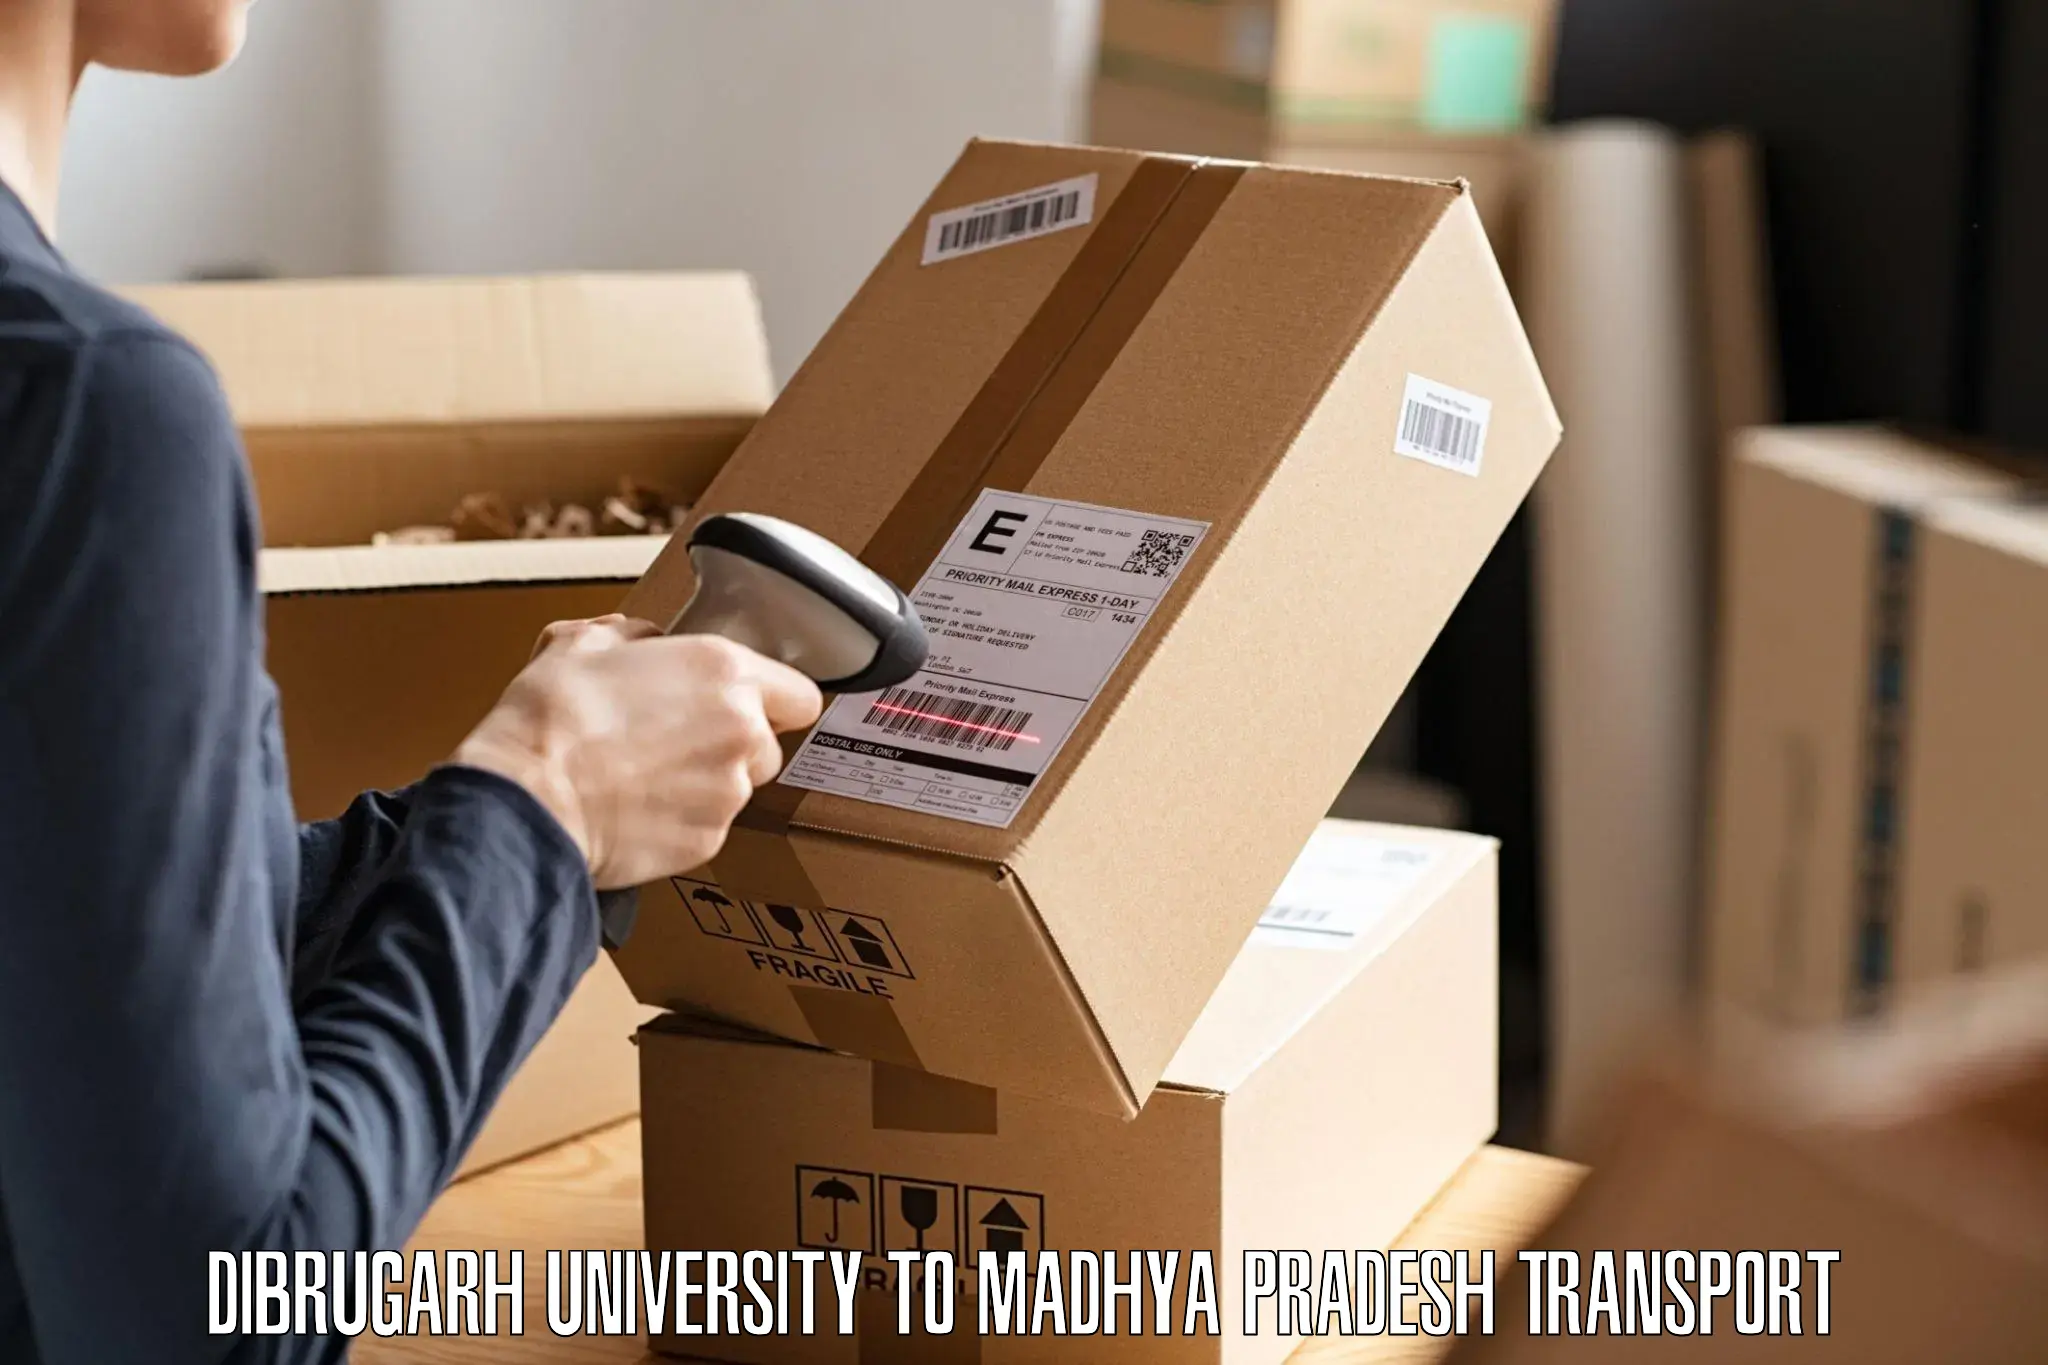 Pick up transport service Dibrugarh University to Ashoknagar